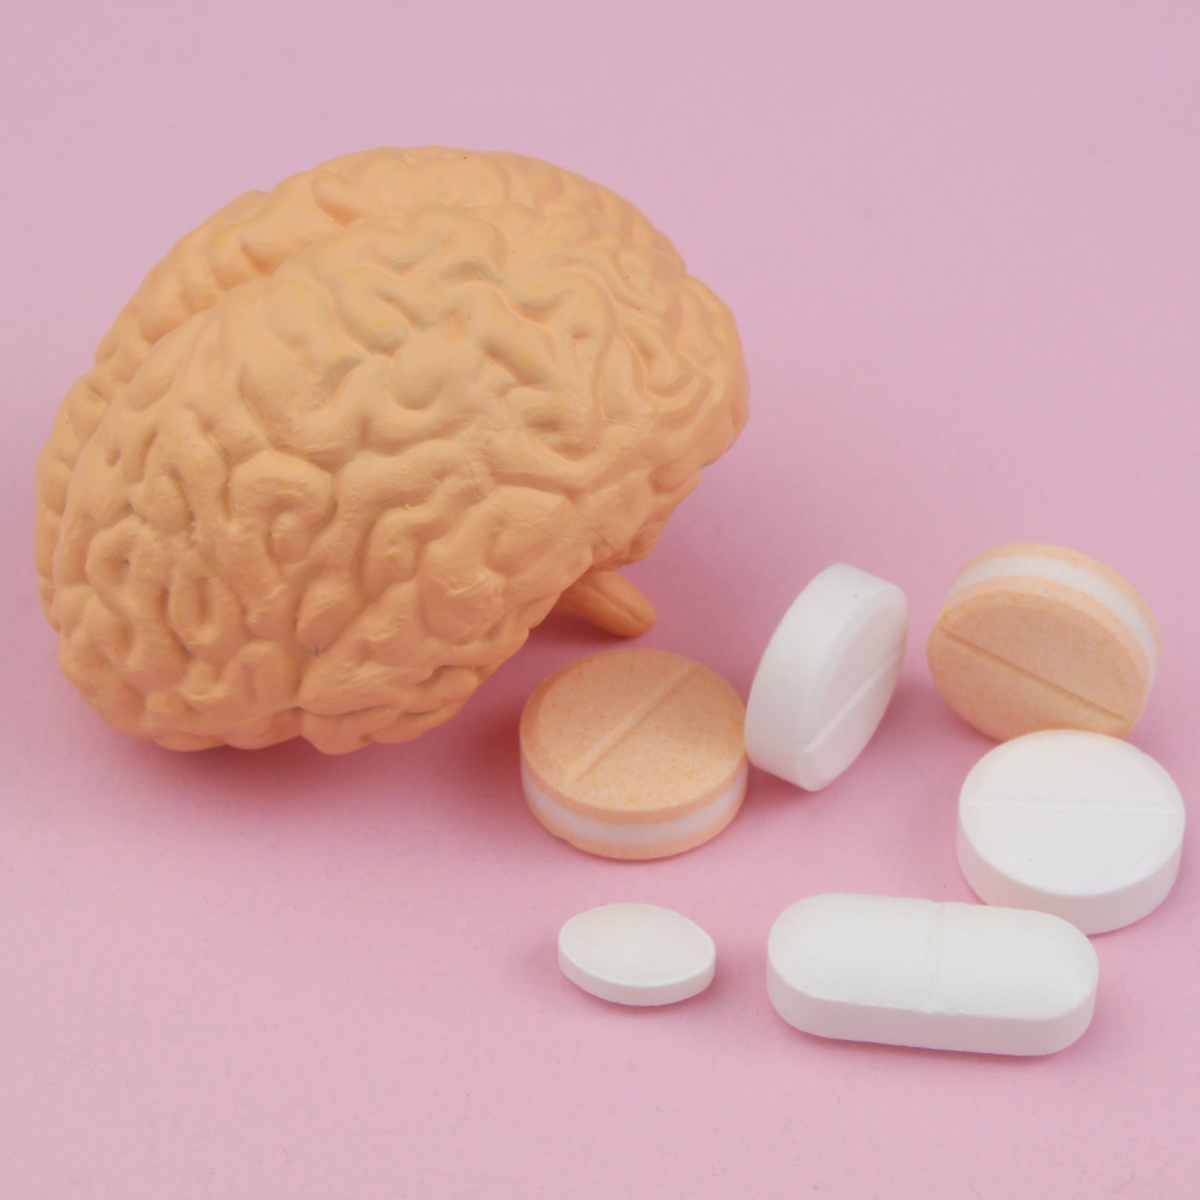 medications next to brain prop